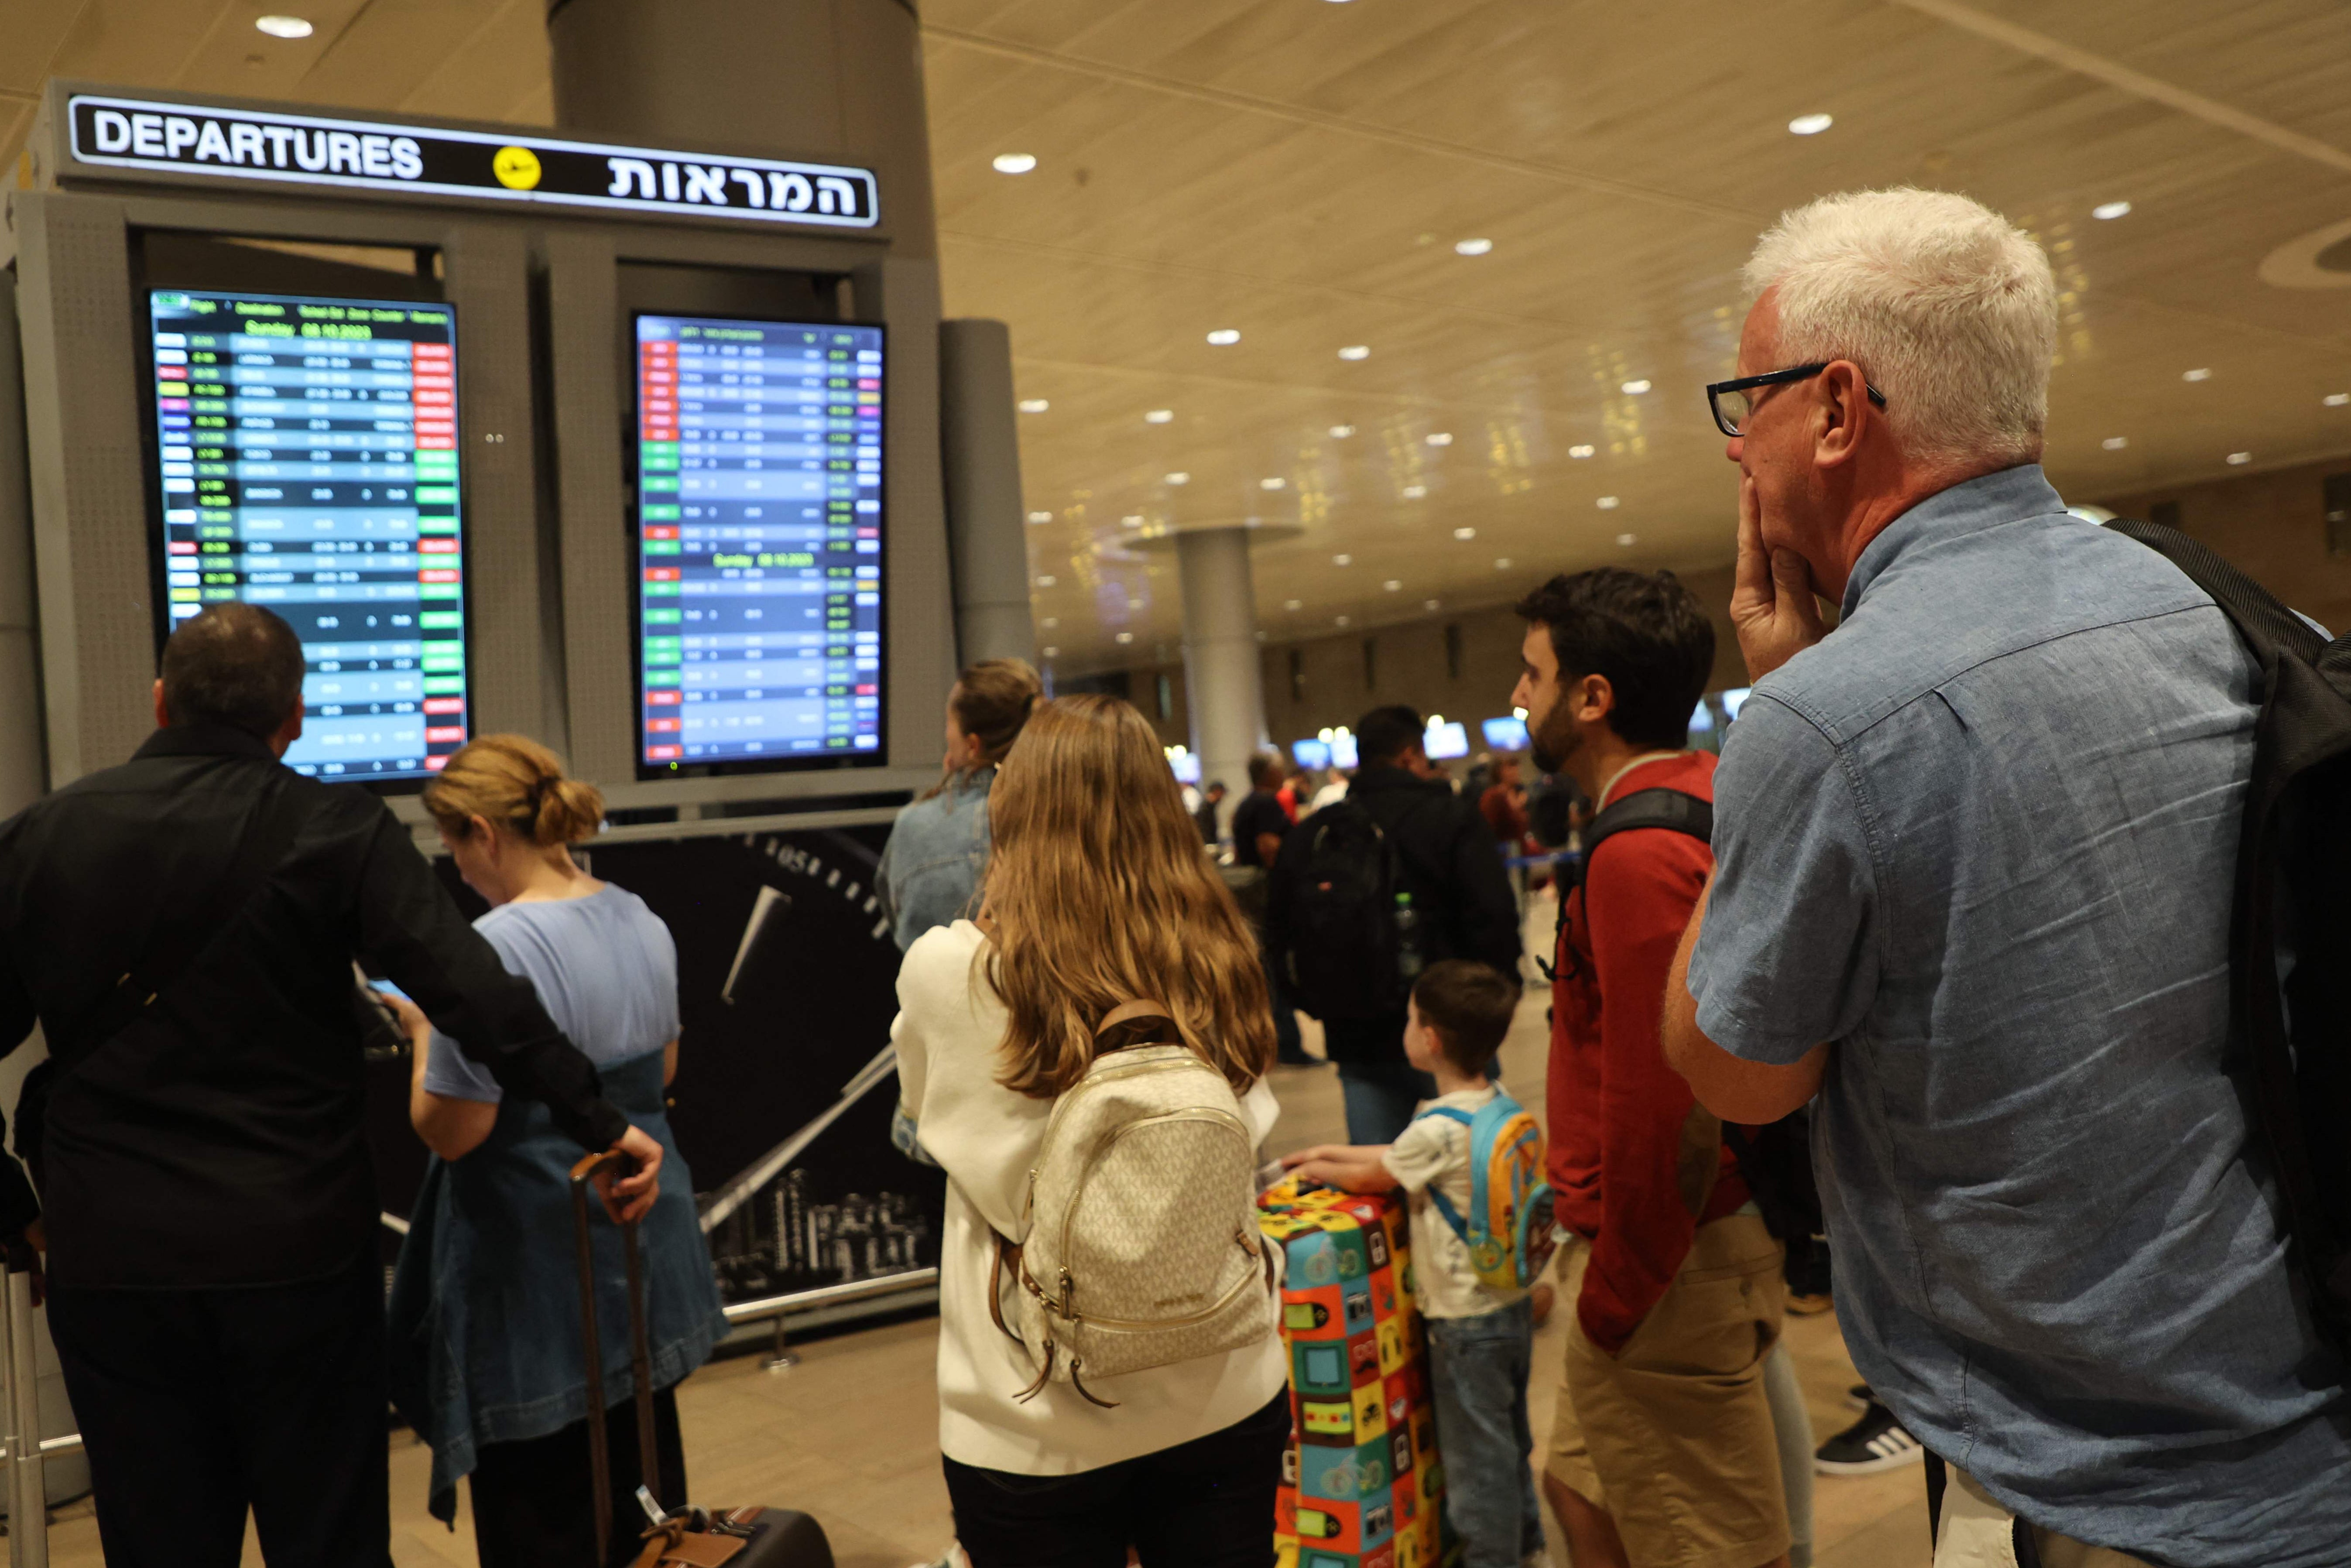 Passengers look at a departure board at Ben Gurion Airport near Tel Aviv, Israel